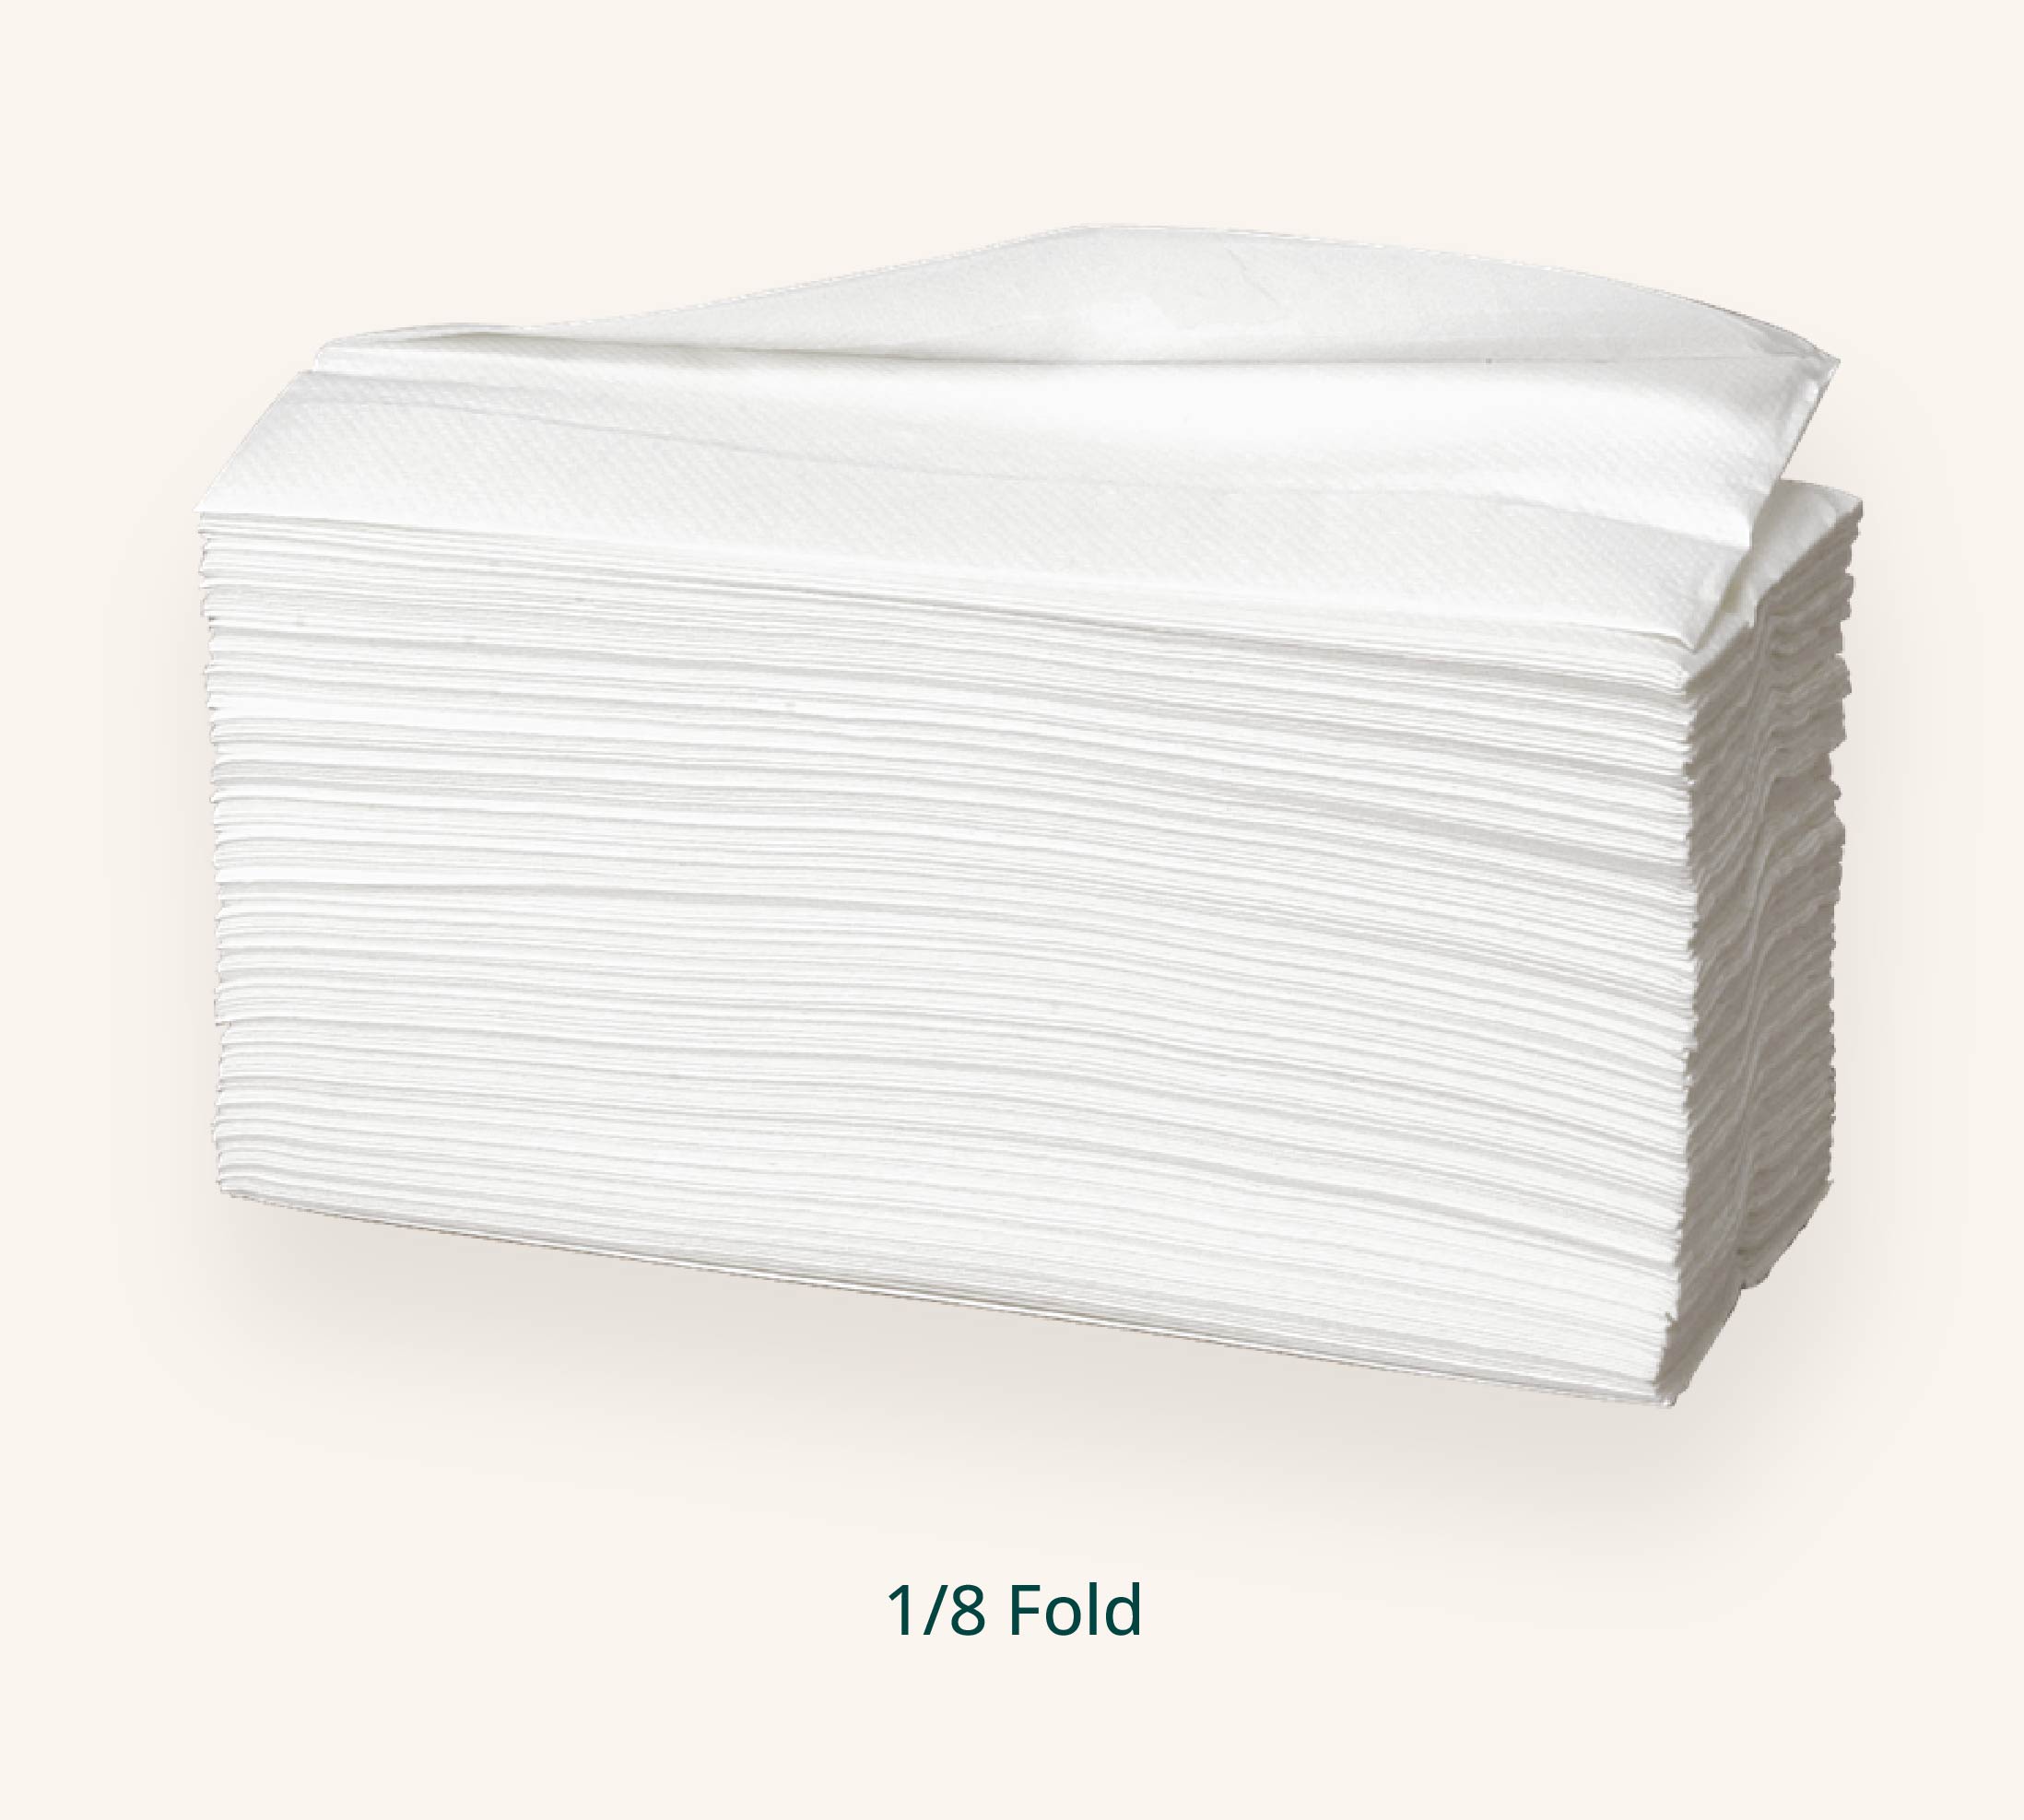 1/8 fold paper napkins